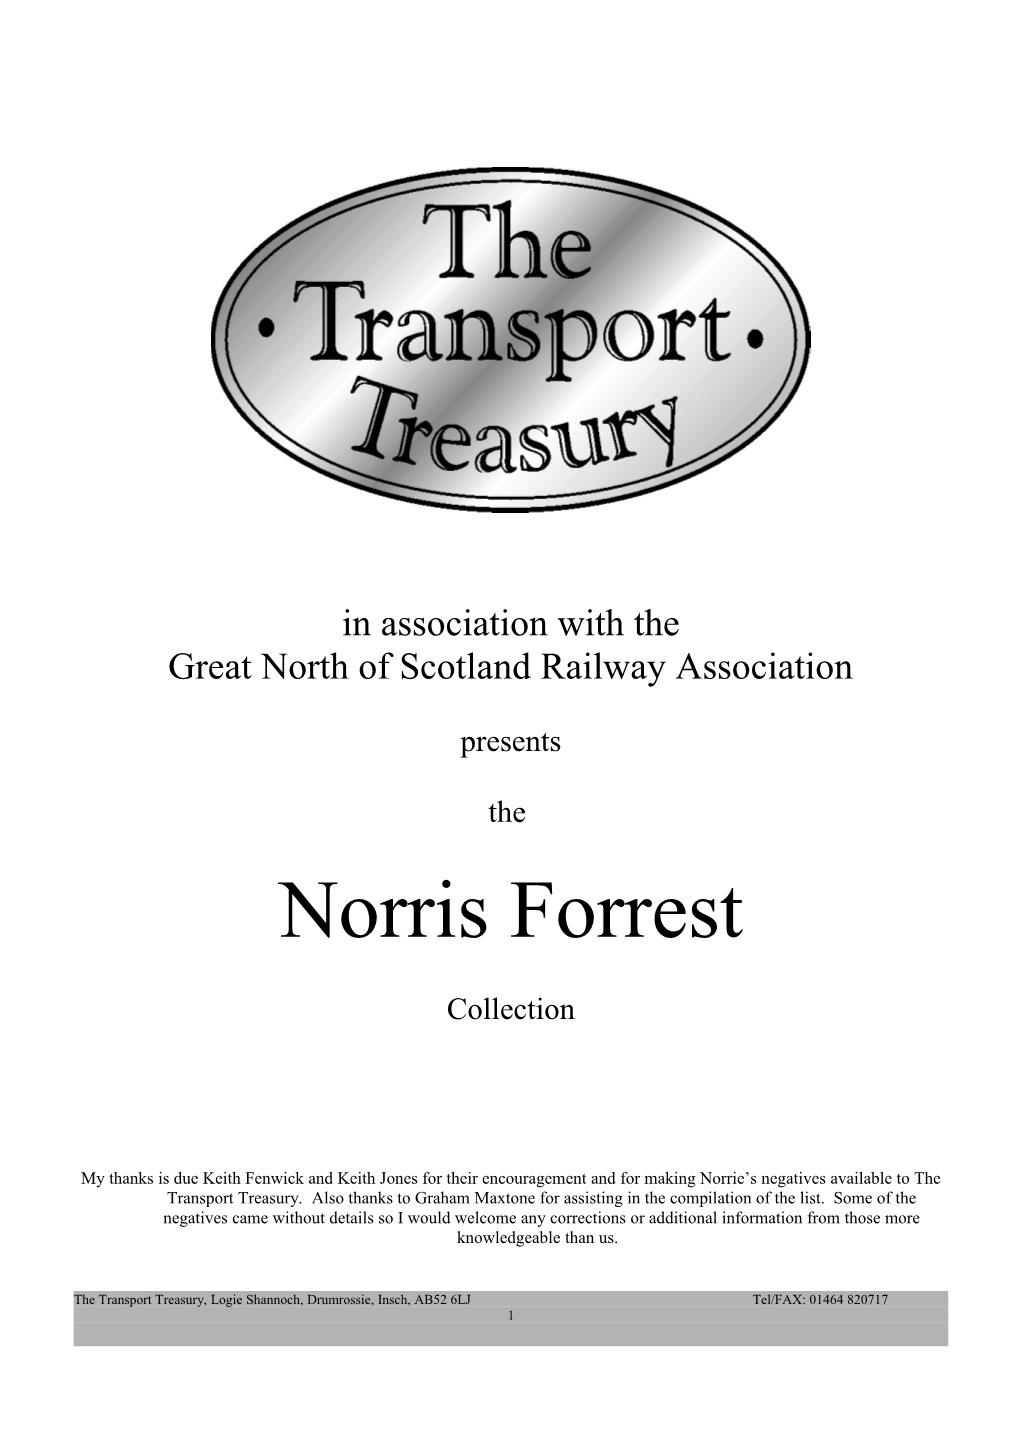 The Transport Treasury, Logie Shannoch, Drumrossie, Insch, AB52 6Ljtel/FAX: 01464 820717